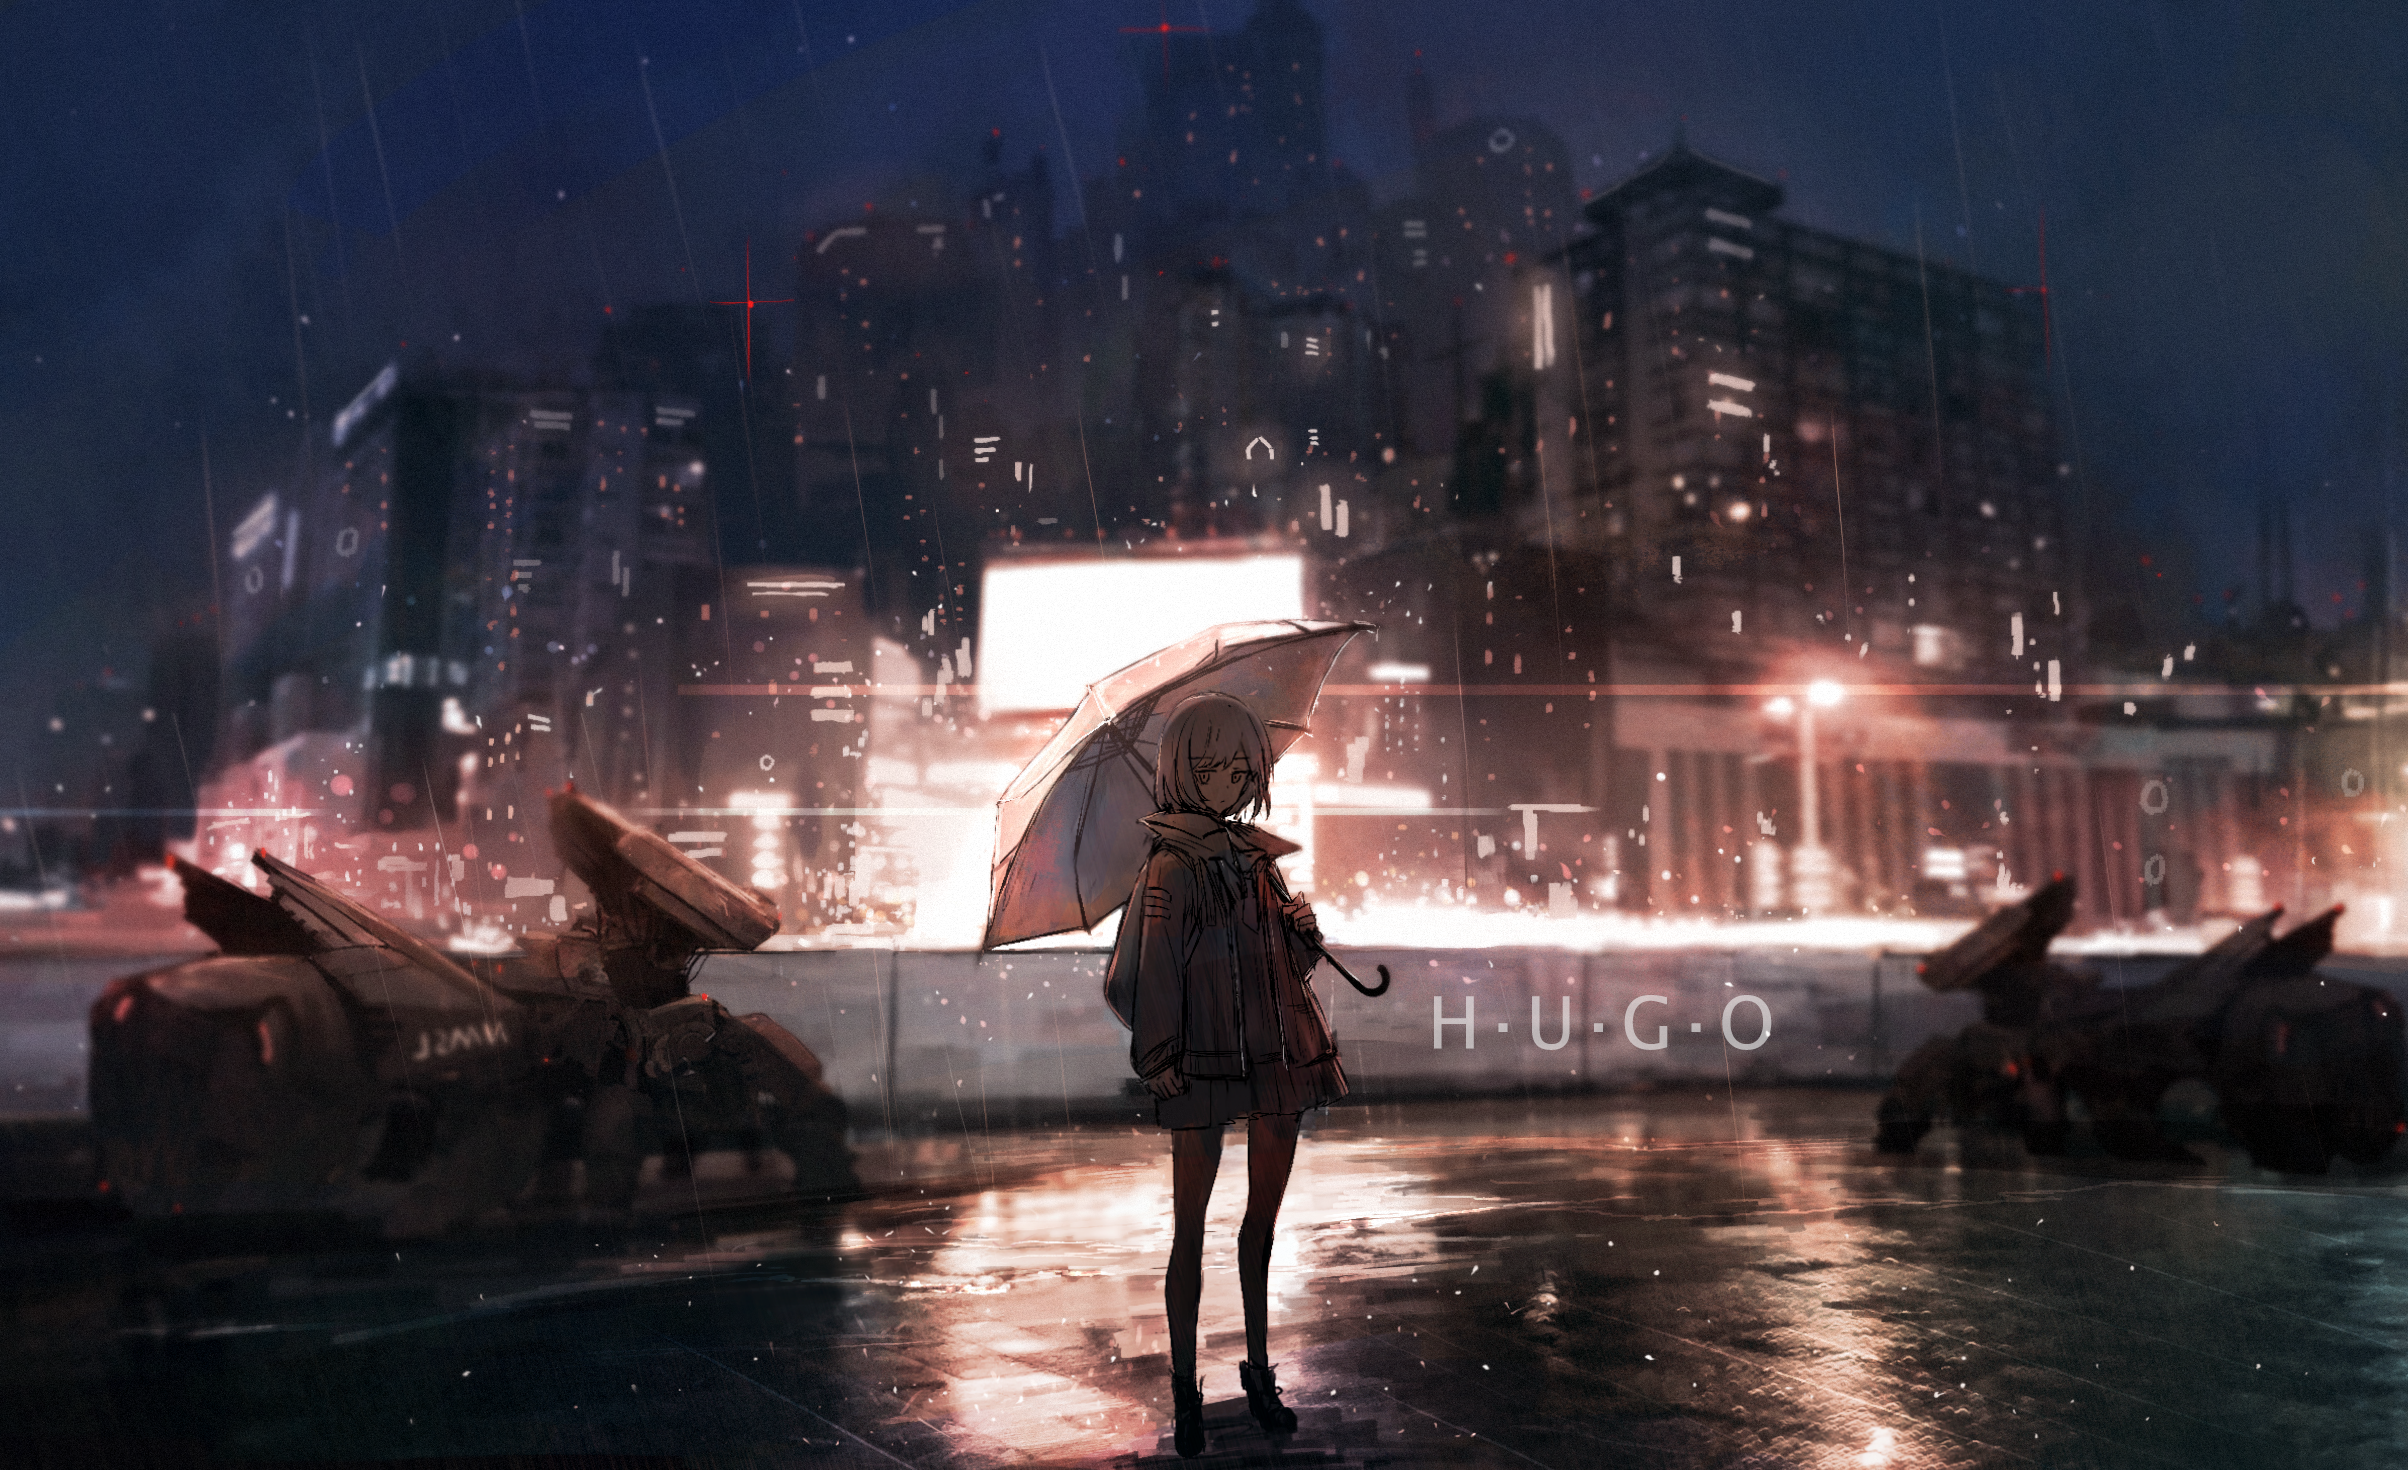 Rain Axle Anime Girls Umbrella Robots Robot Night 2408x1470